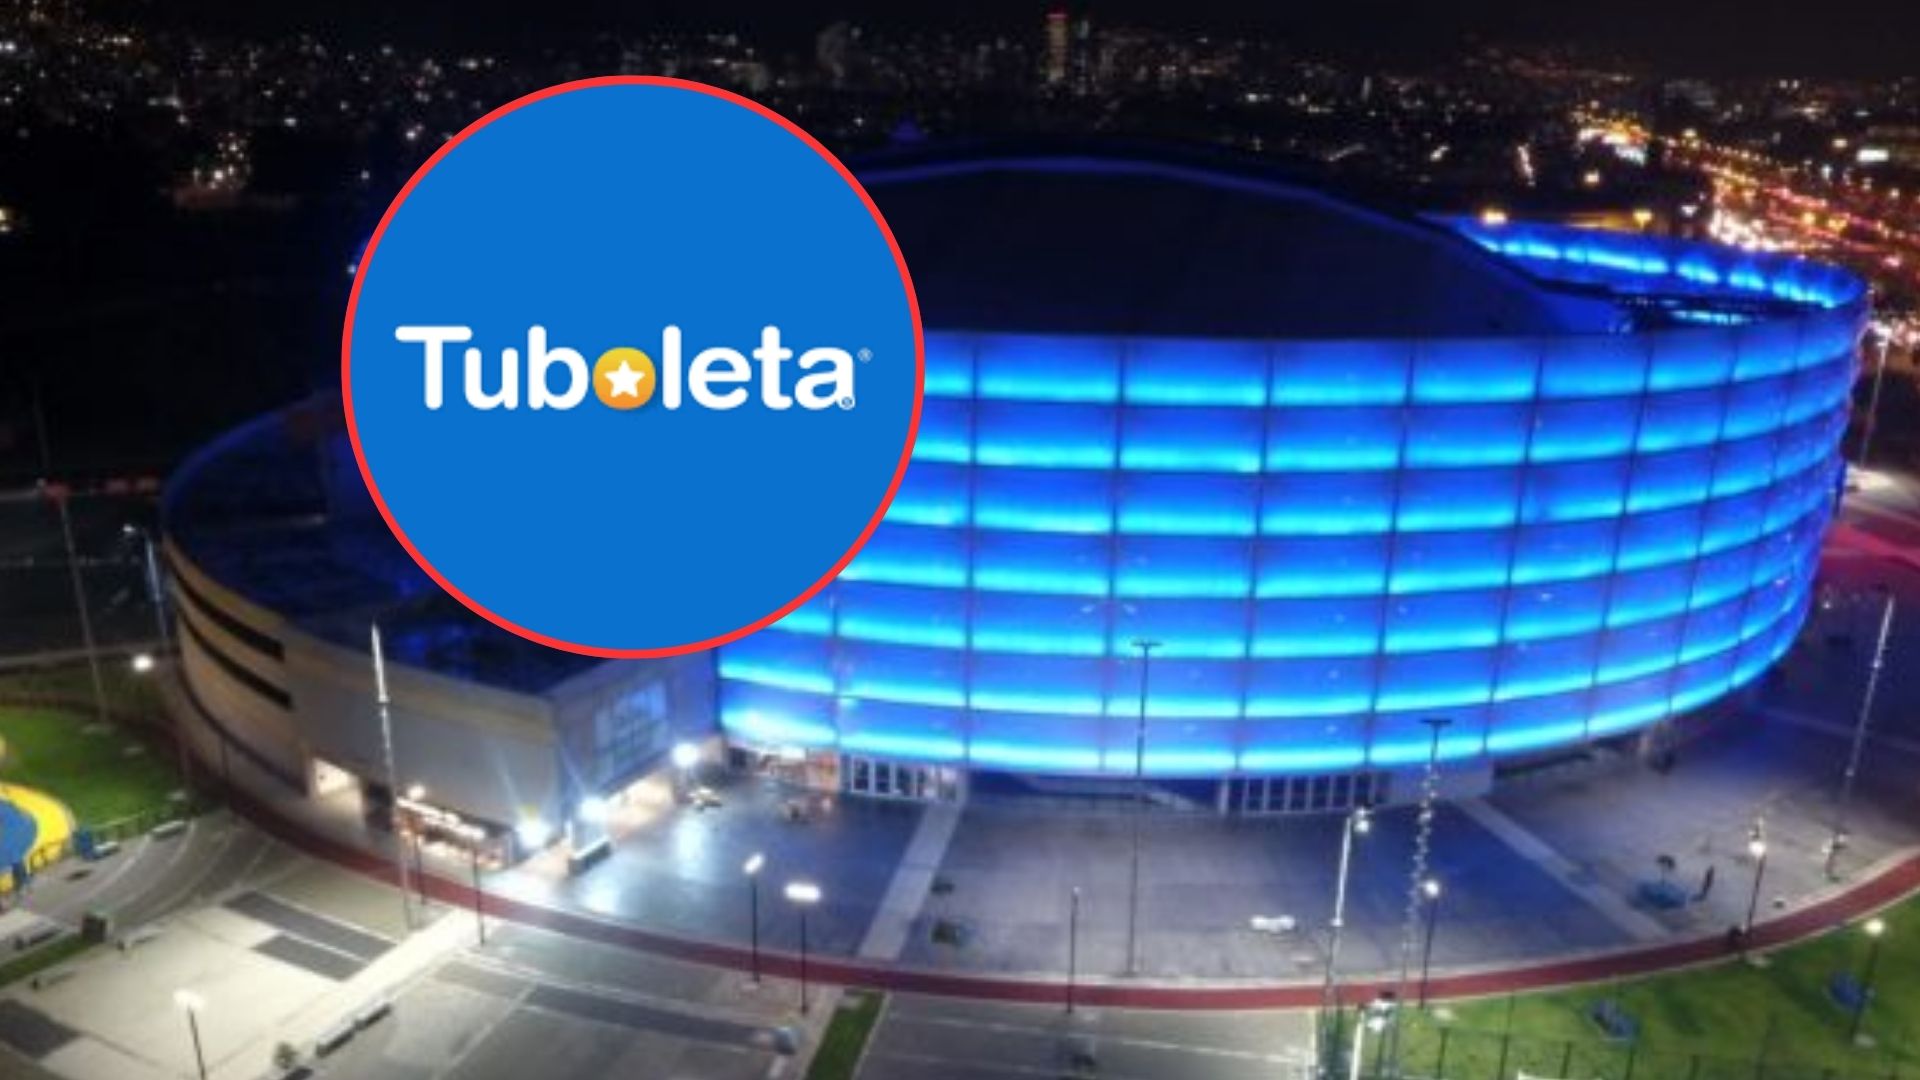 Imagen de Movistar Arena por noticia sobre anuncio de Tuboleta